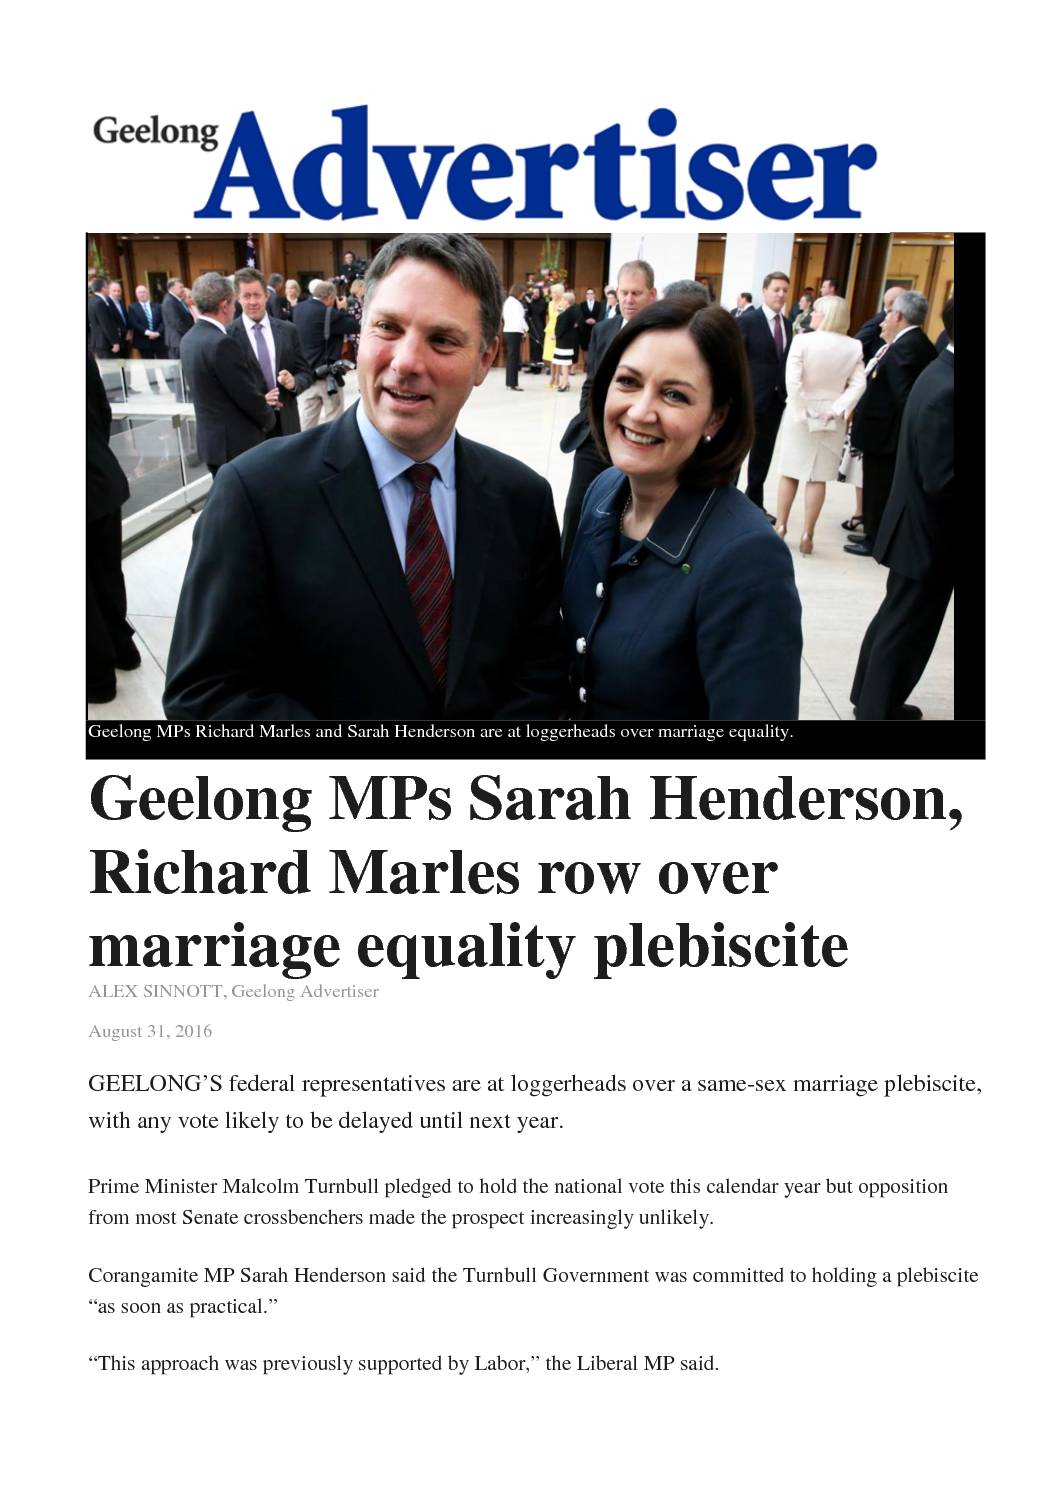 16.09.05 Geelong MP’s row over Marraige equality Plebisite